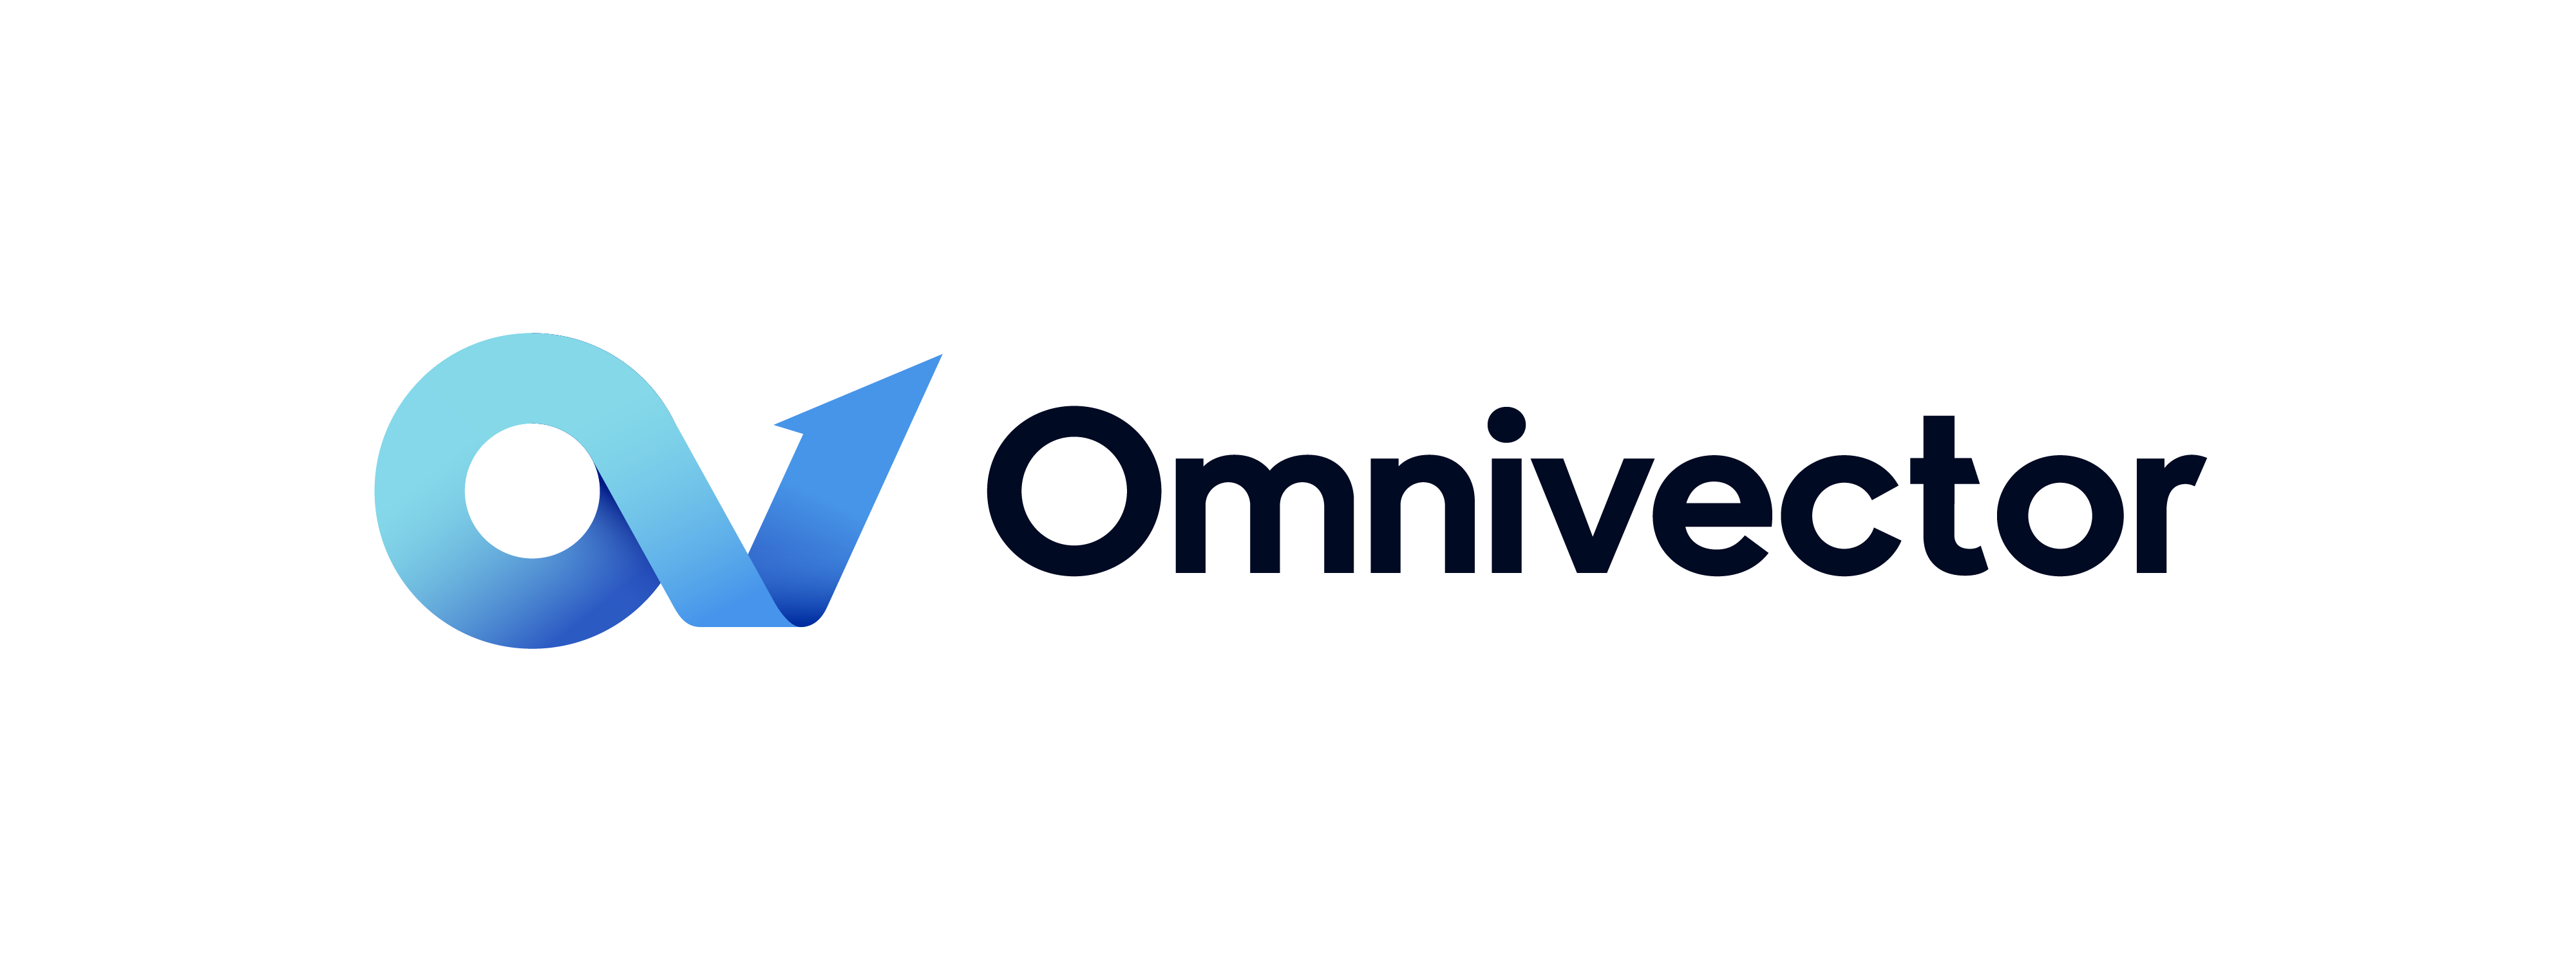 omnivector-logo